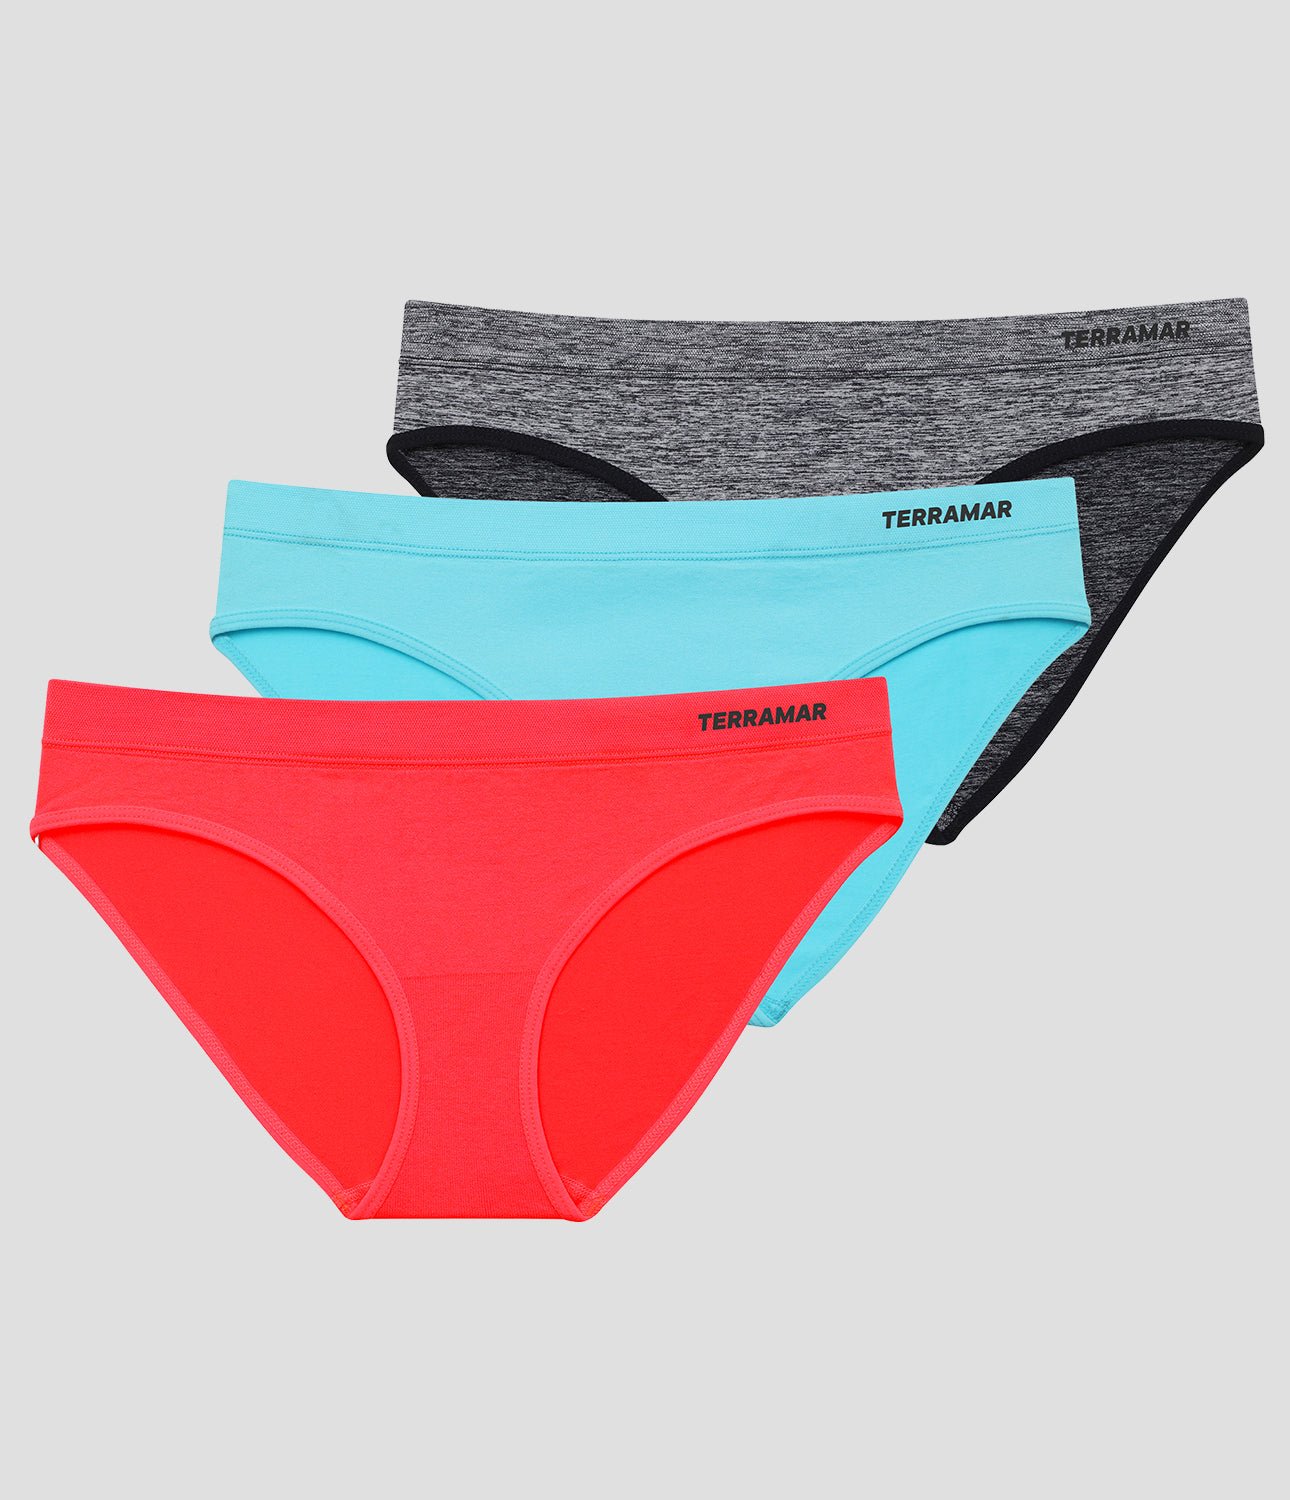 Terramar Women's Seamless Bikini Underwear (3 Pack)